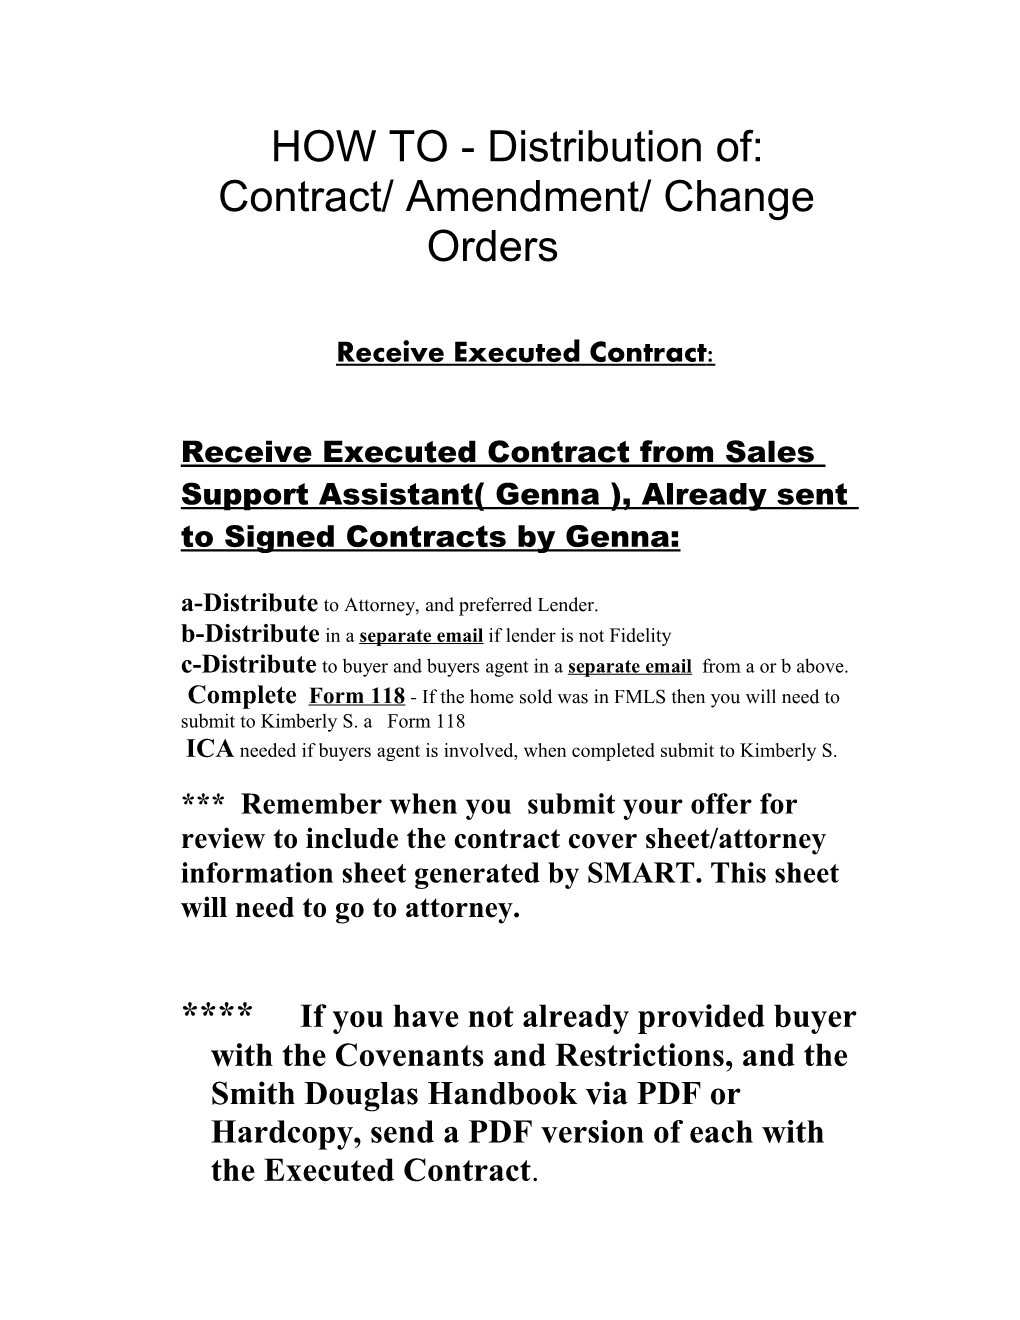 Contract/ Amendment/ Change Orders: Distribution